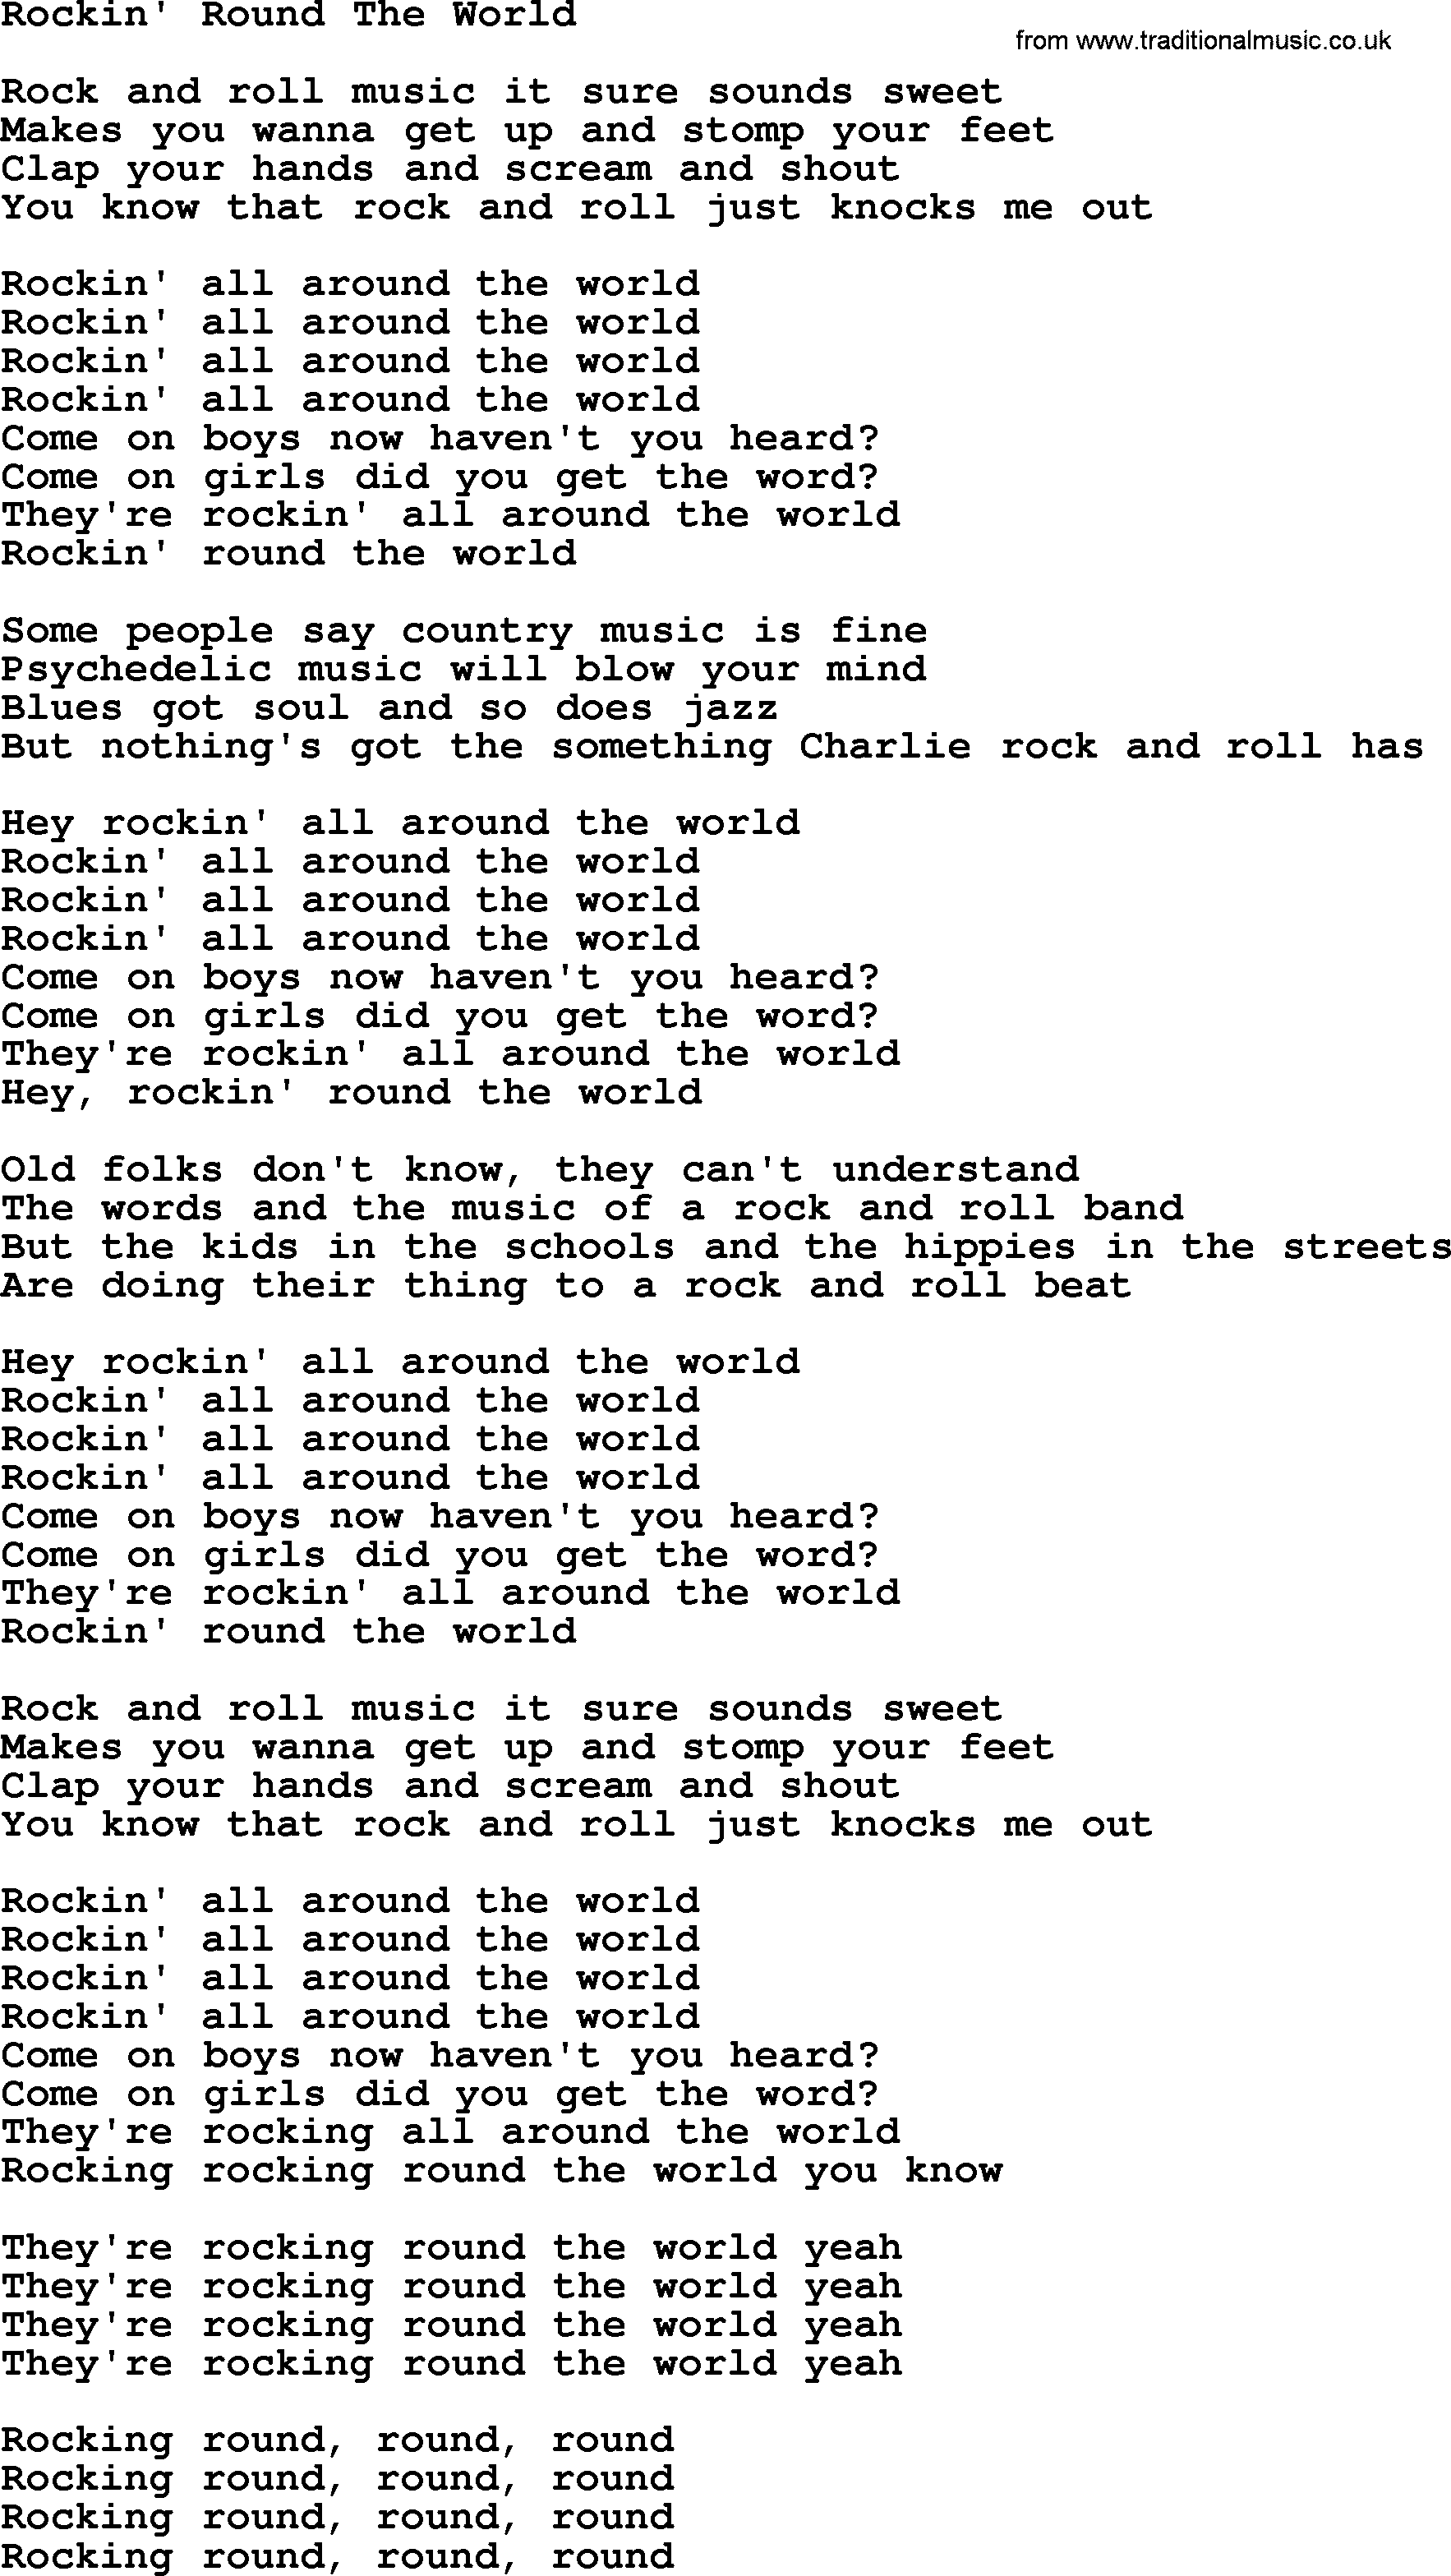 The Byrds song Rockin' Round The World, lyrics